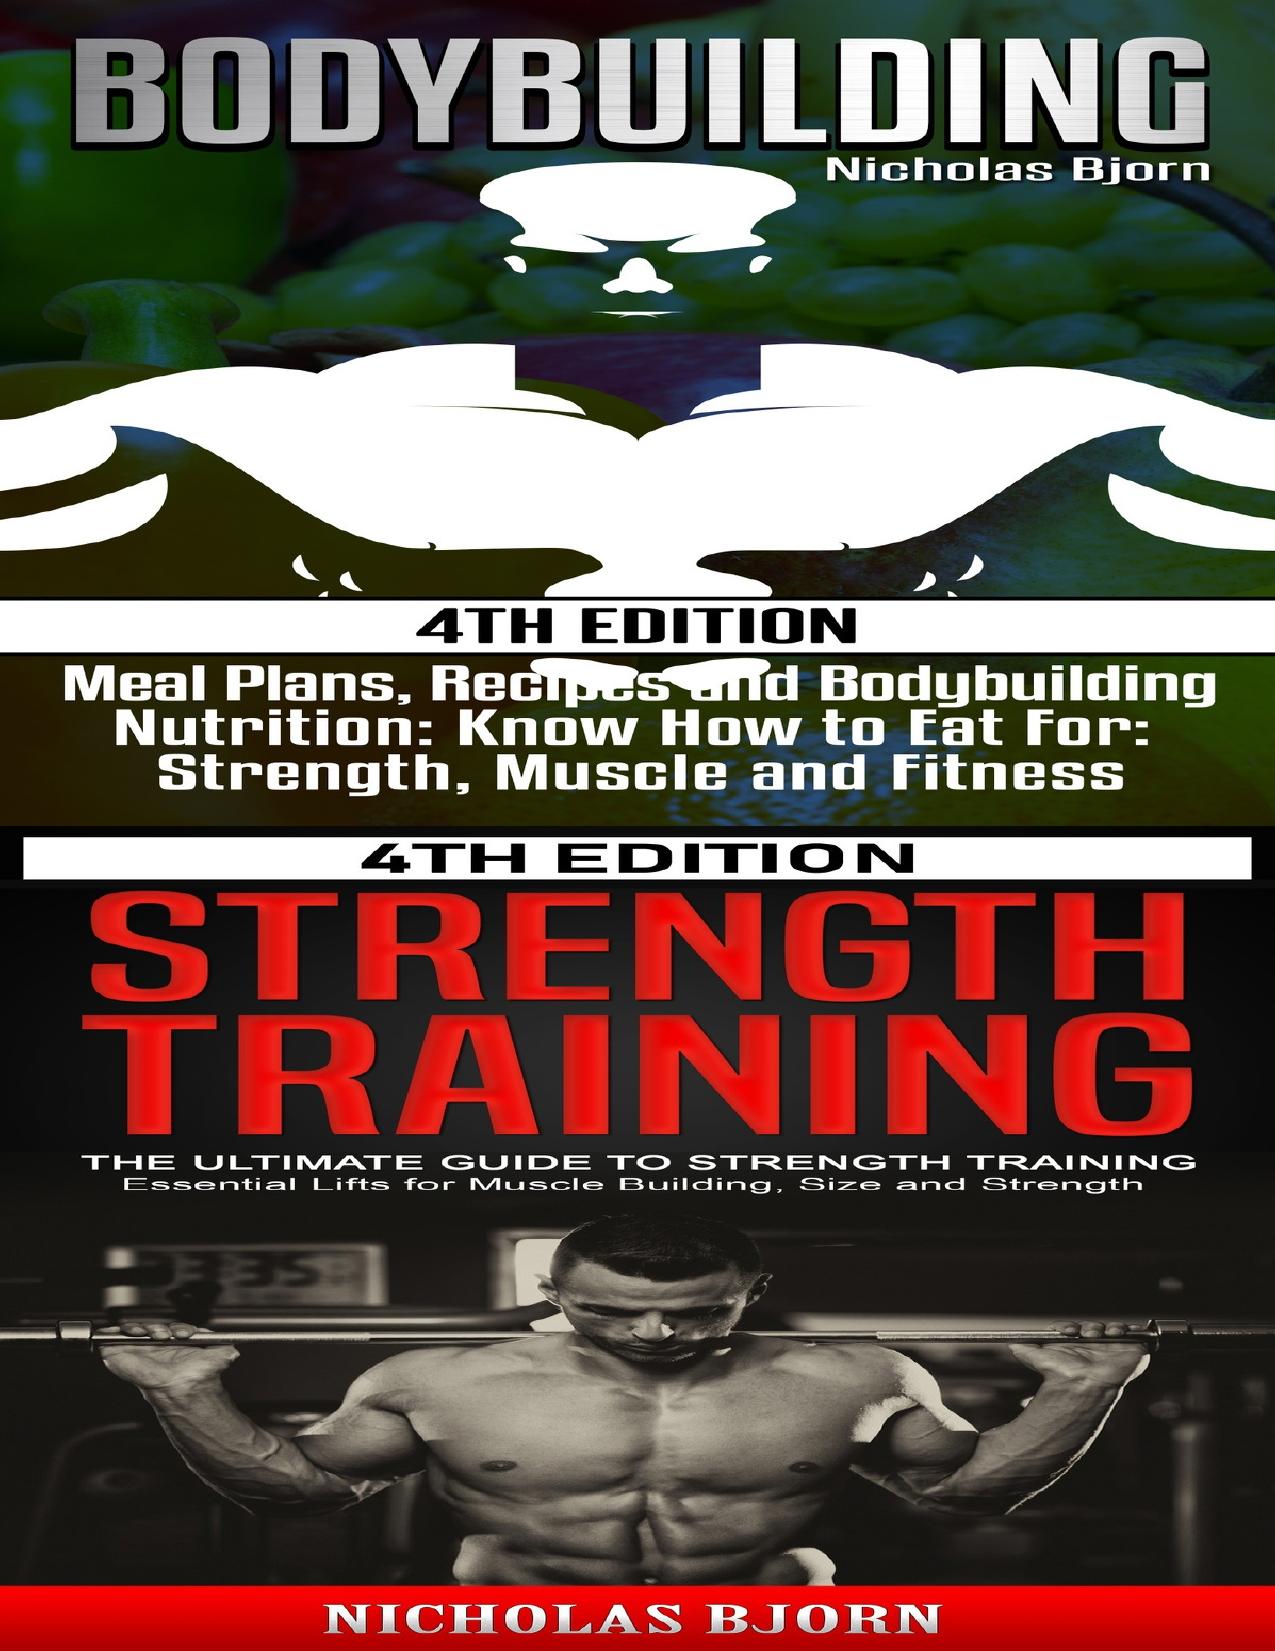 bodybuilding ebooks torrent